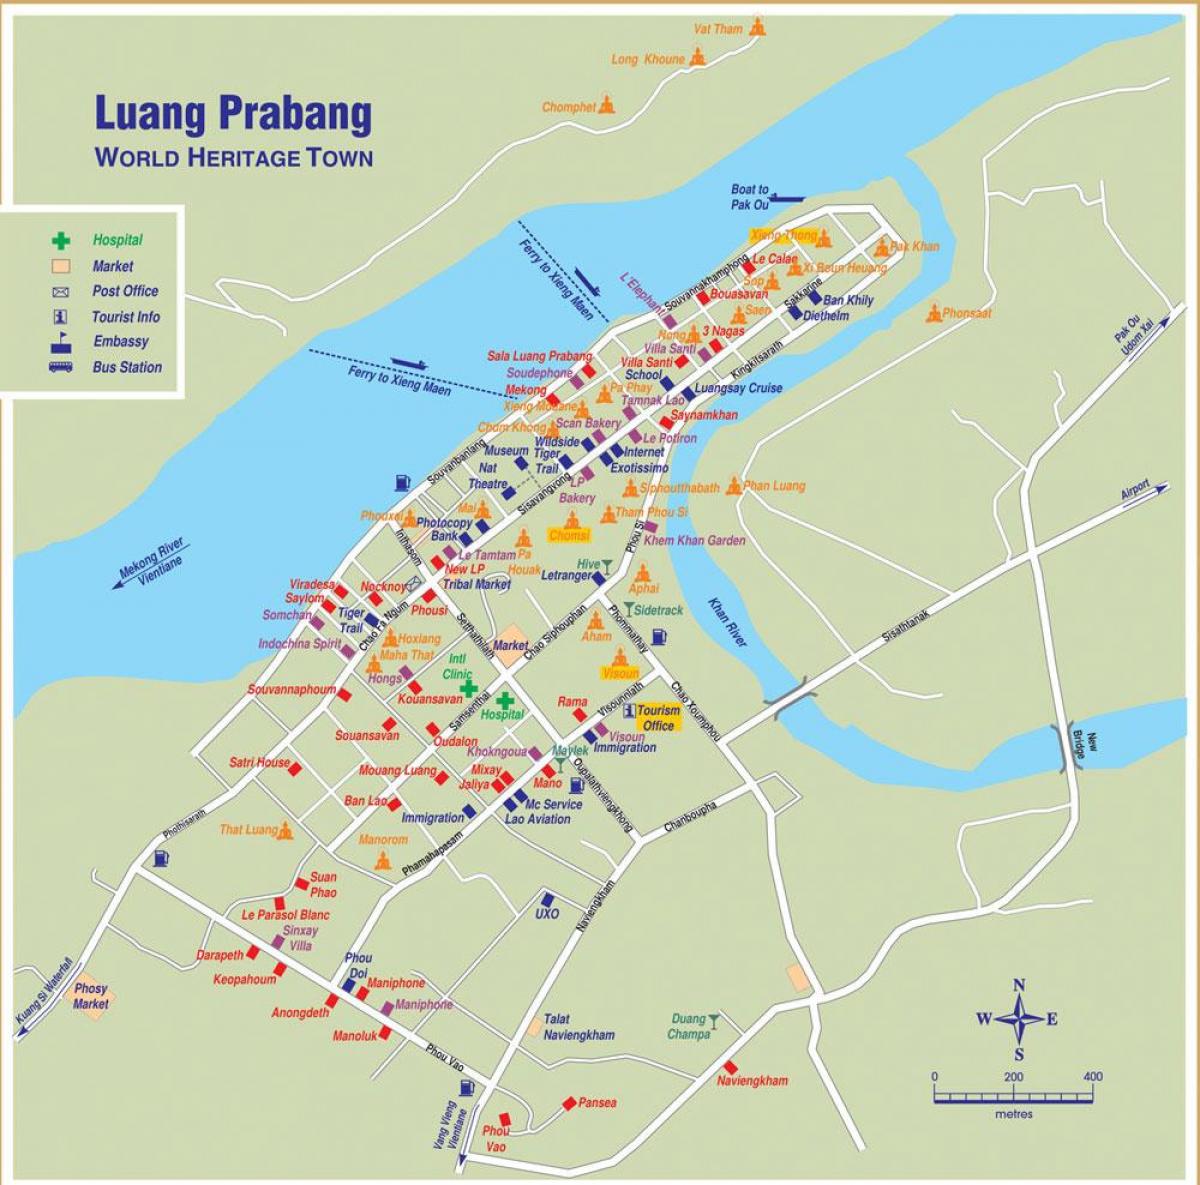 Mapa de luang prabang laos 